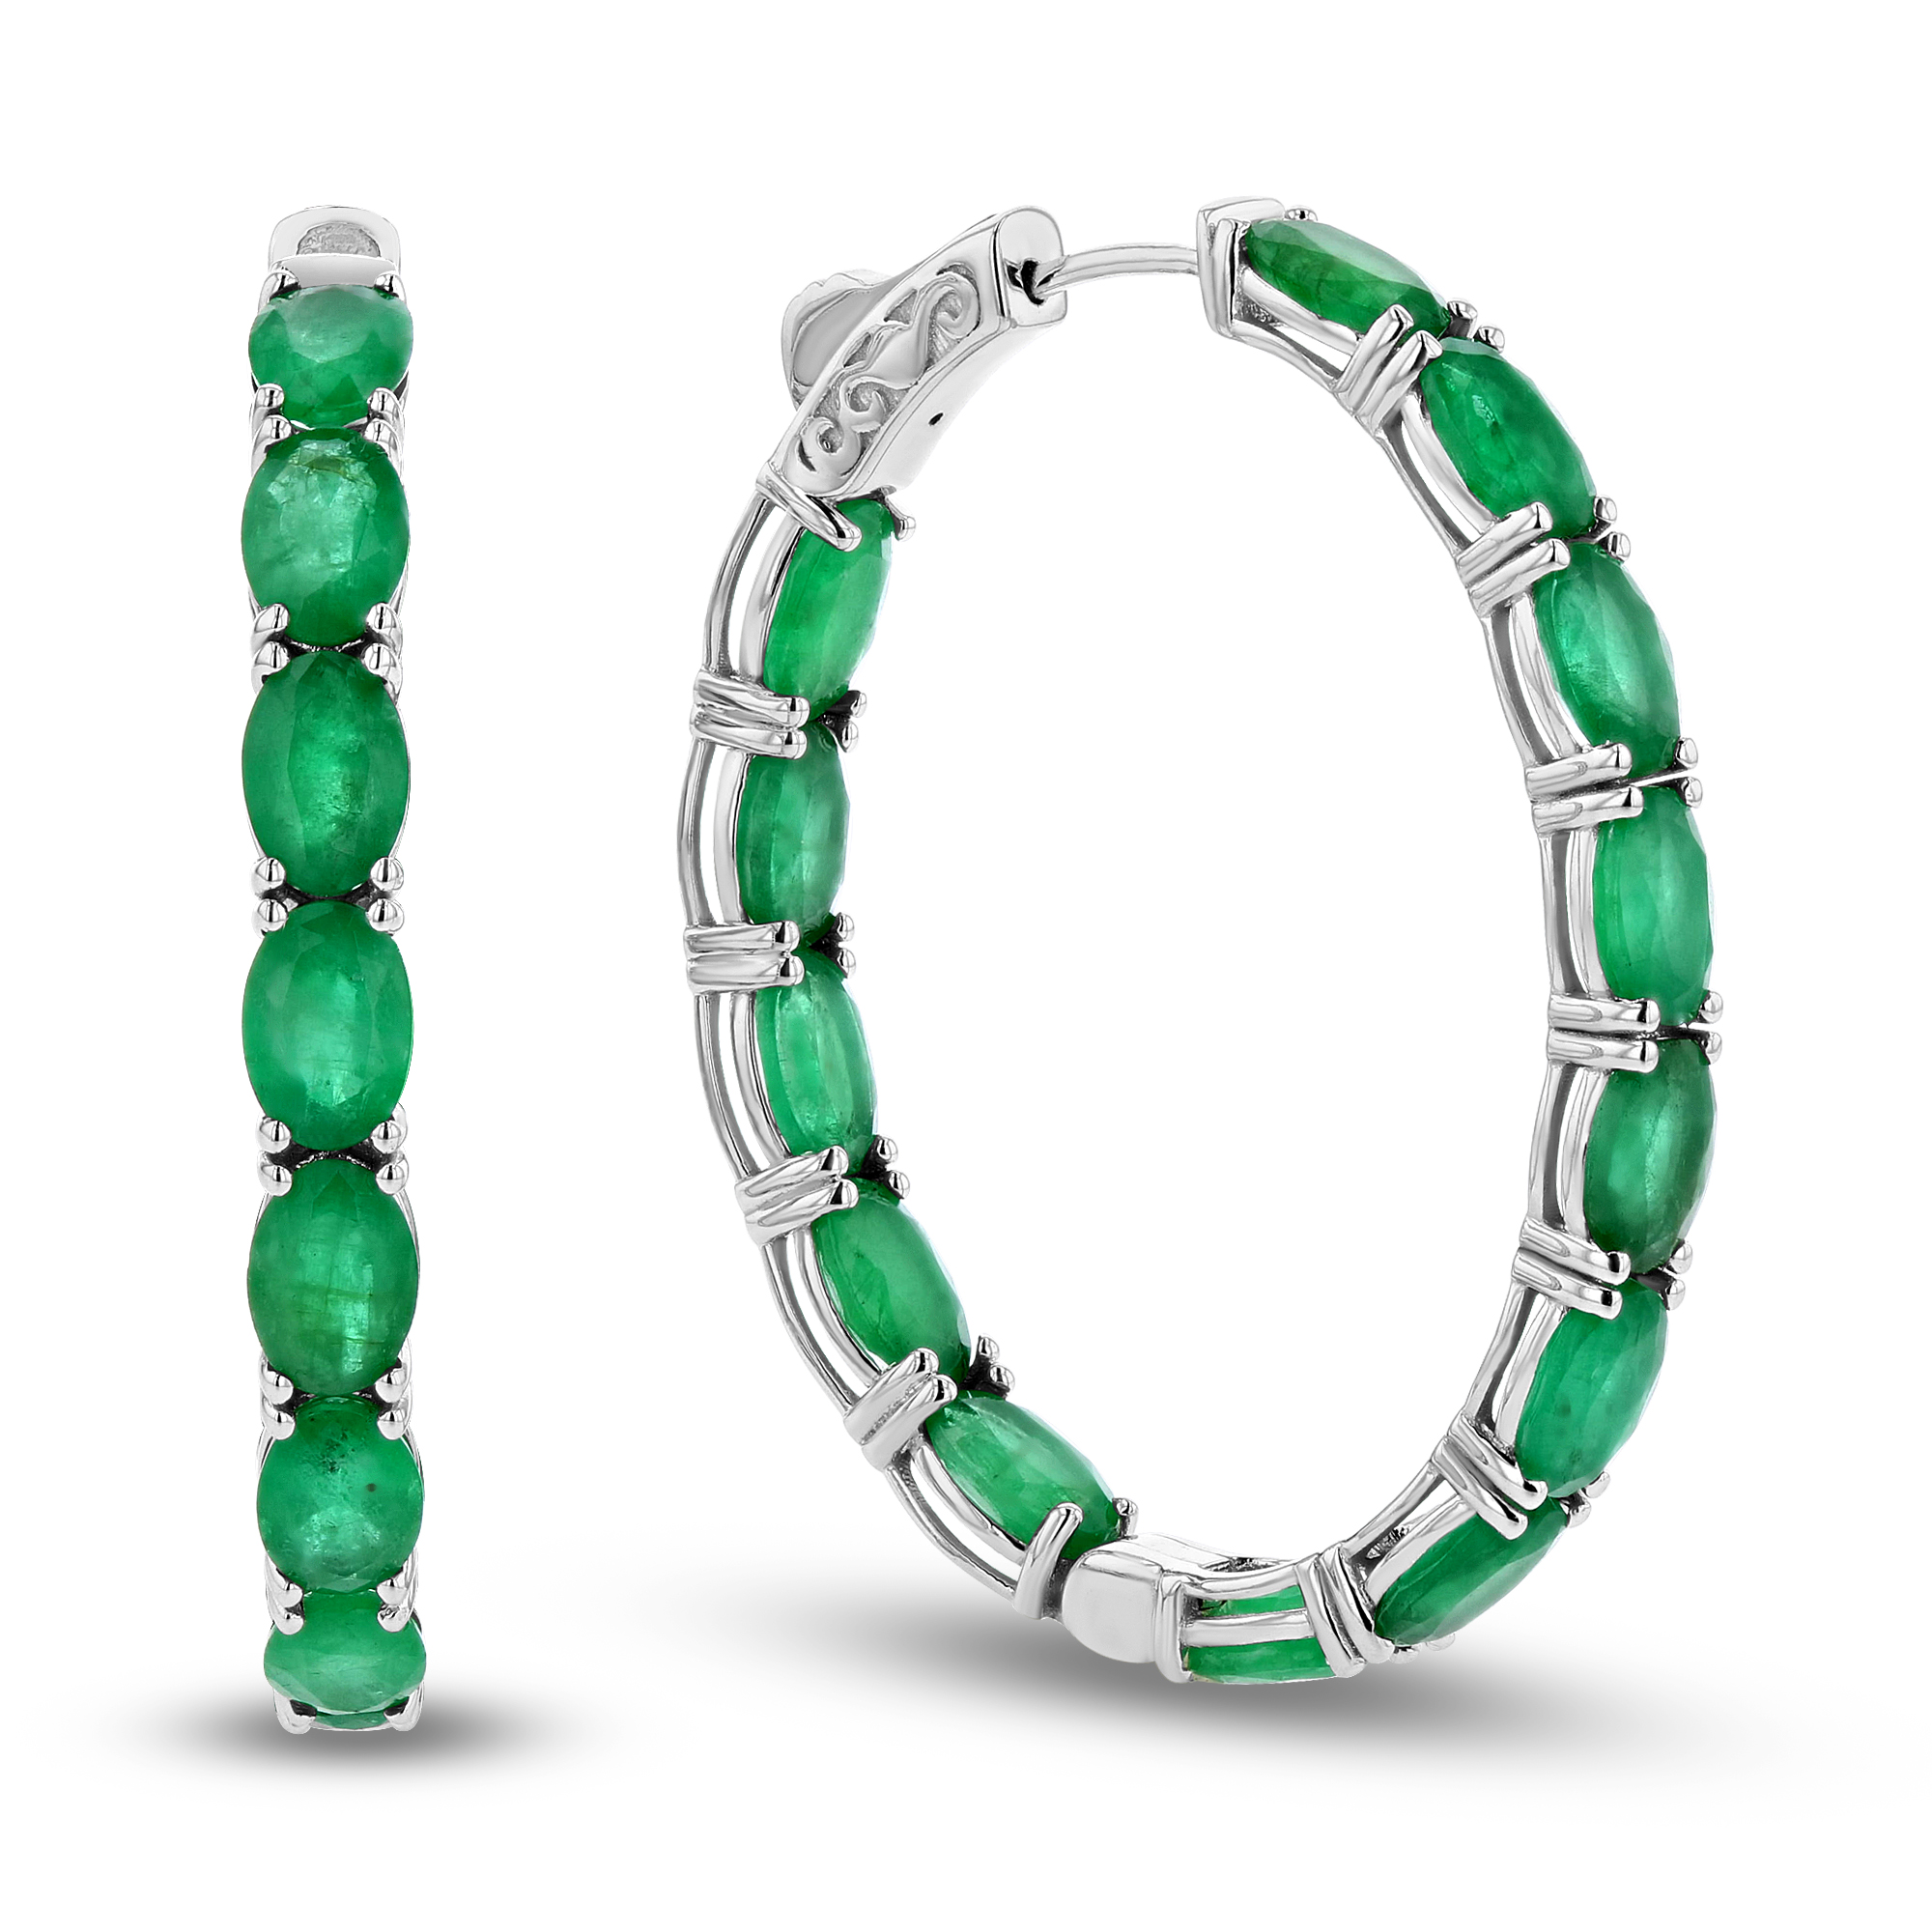 View 10.50ctw Oval Emerald Hoop Earrings in 14k White Gold